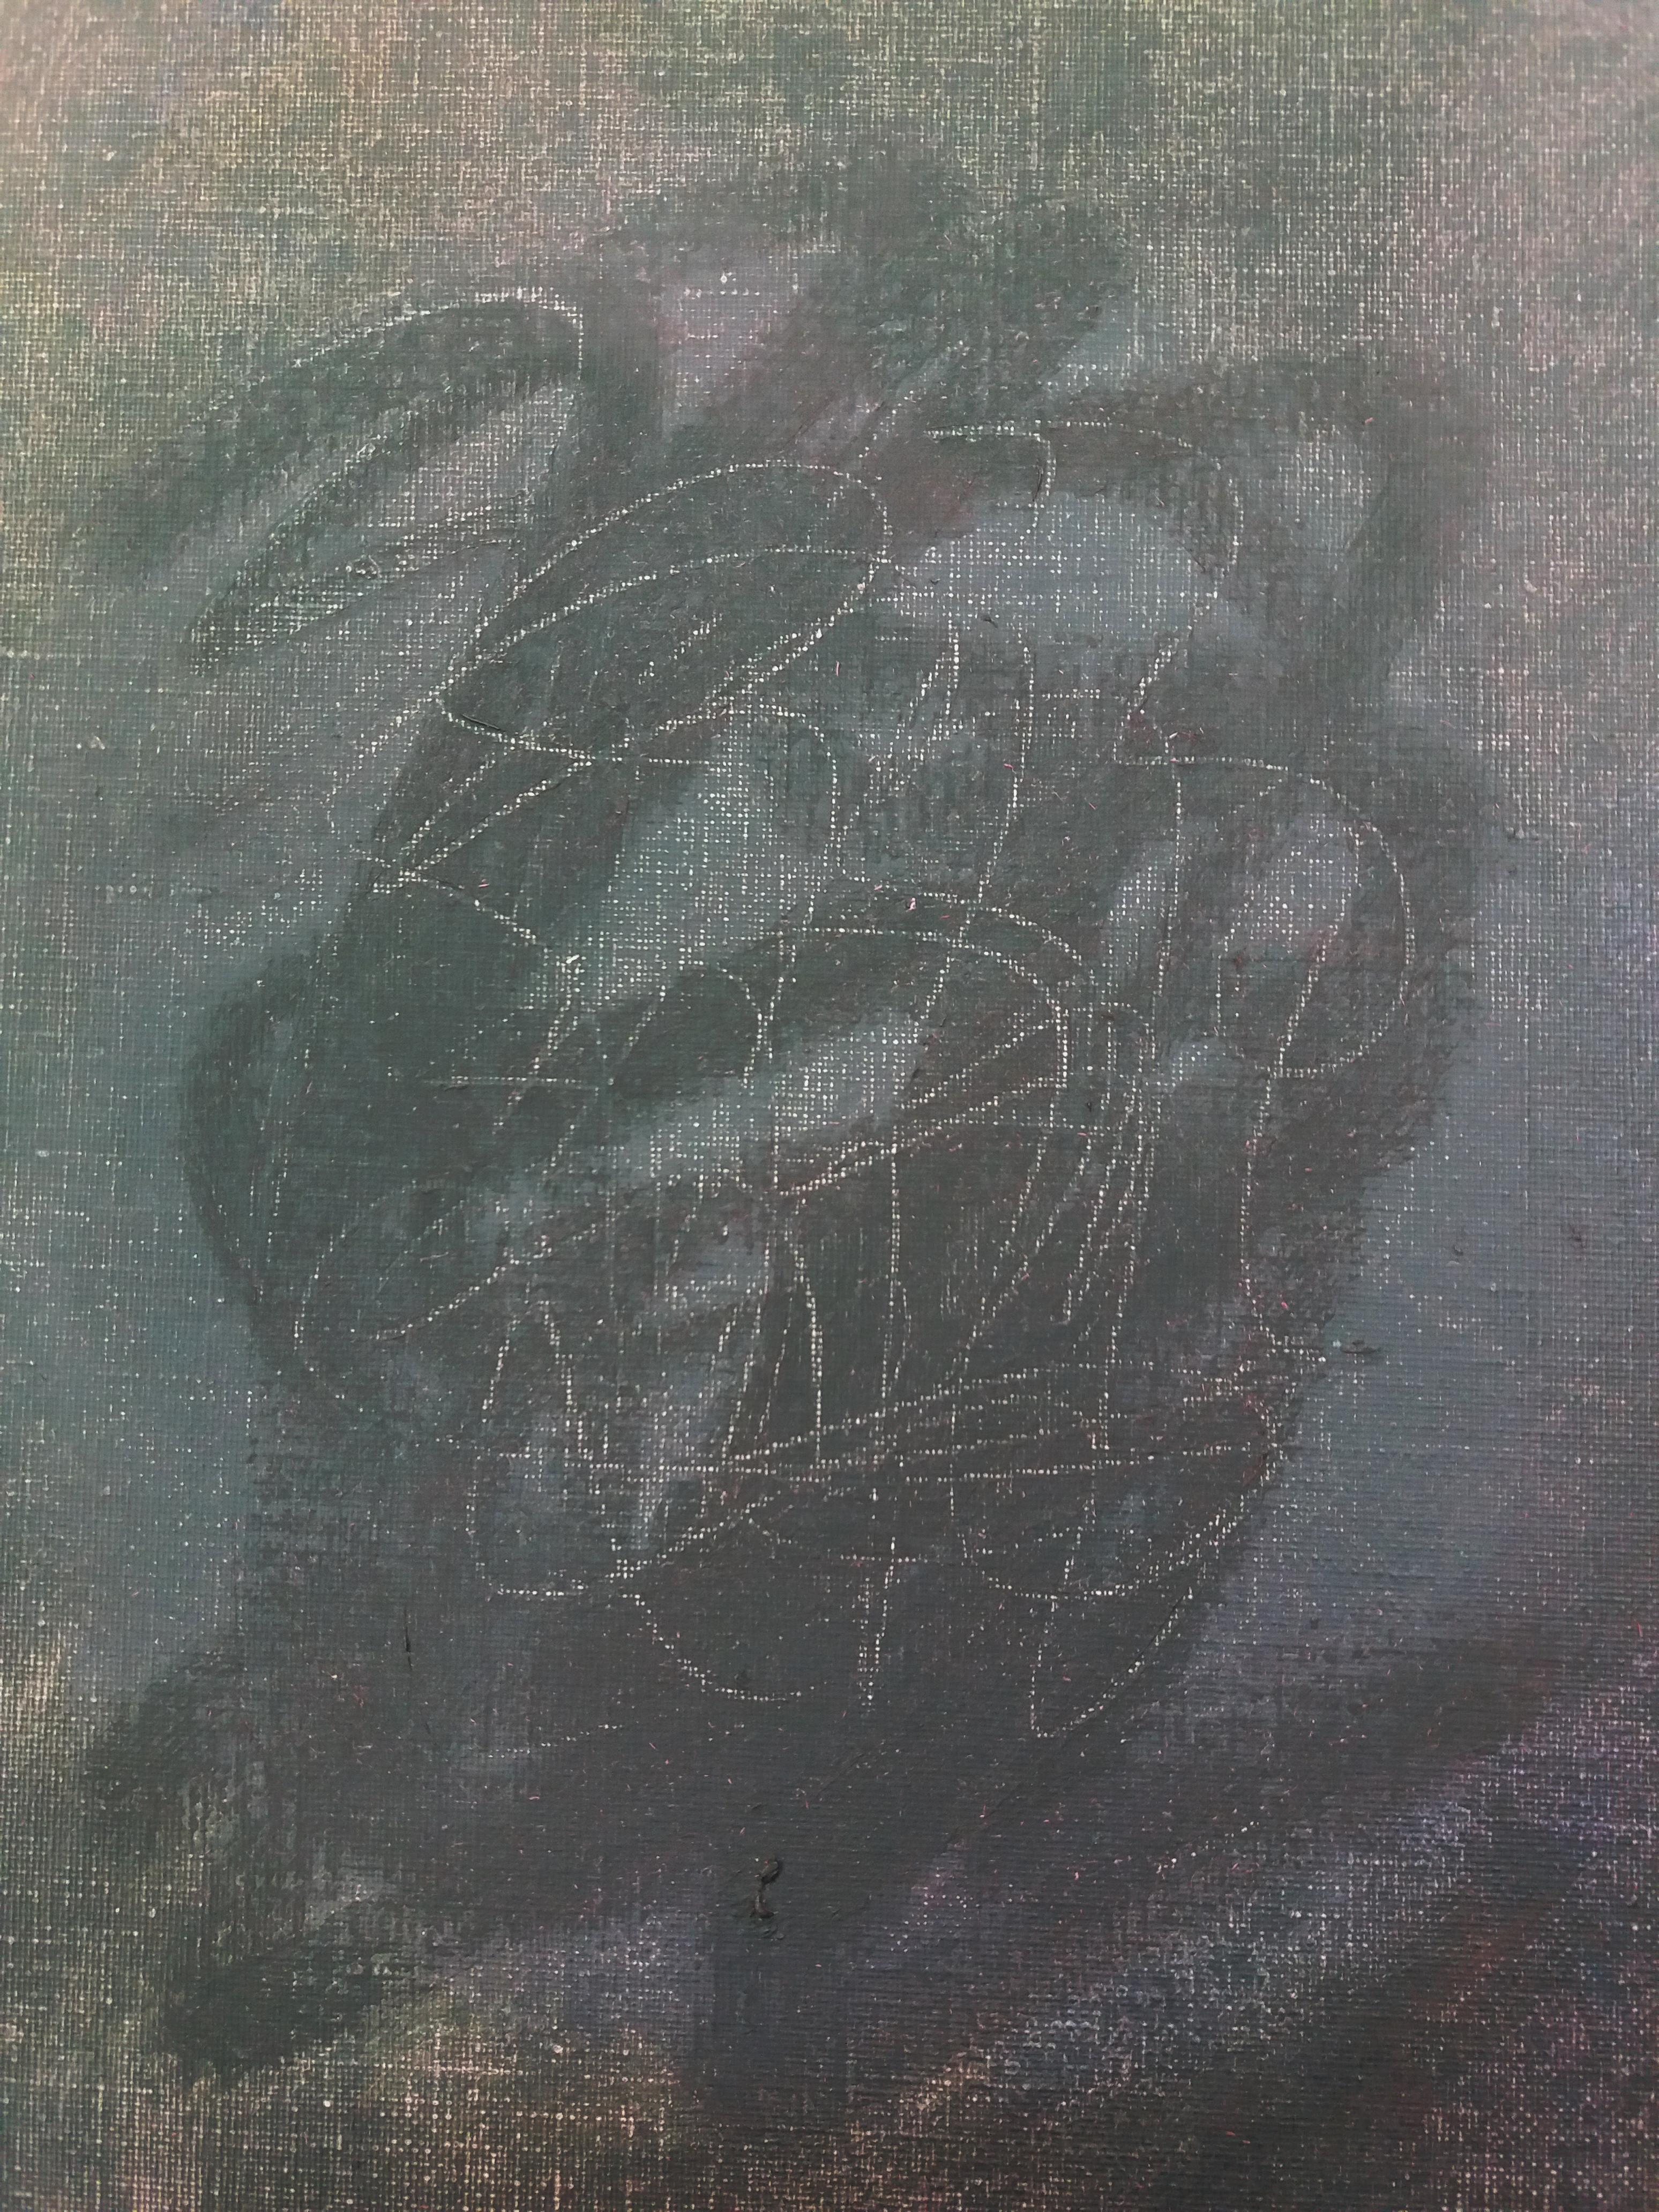 Argimon  13 Black, Vertical,  original abstract canvas acrylic painting 2